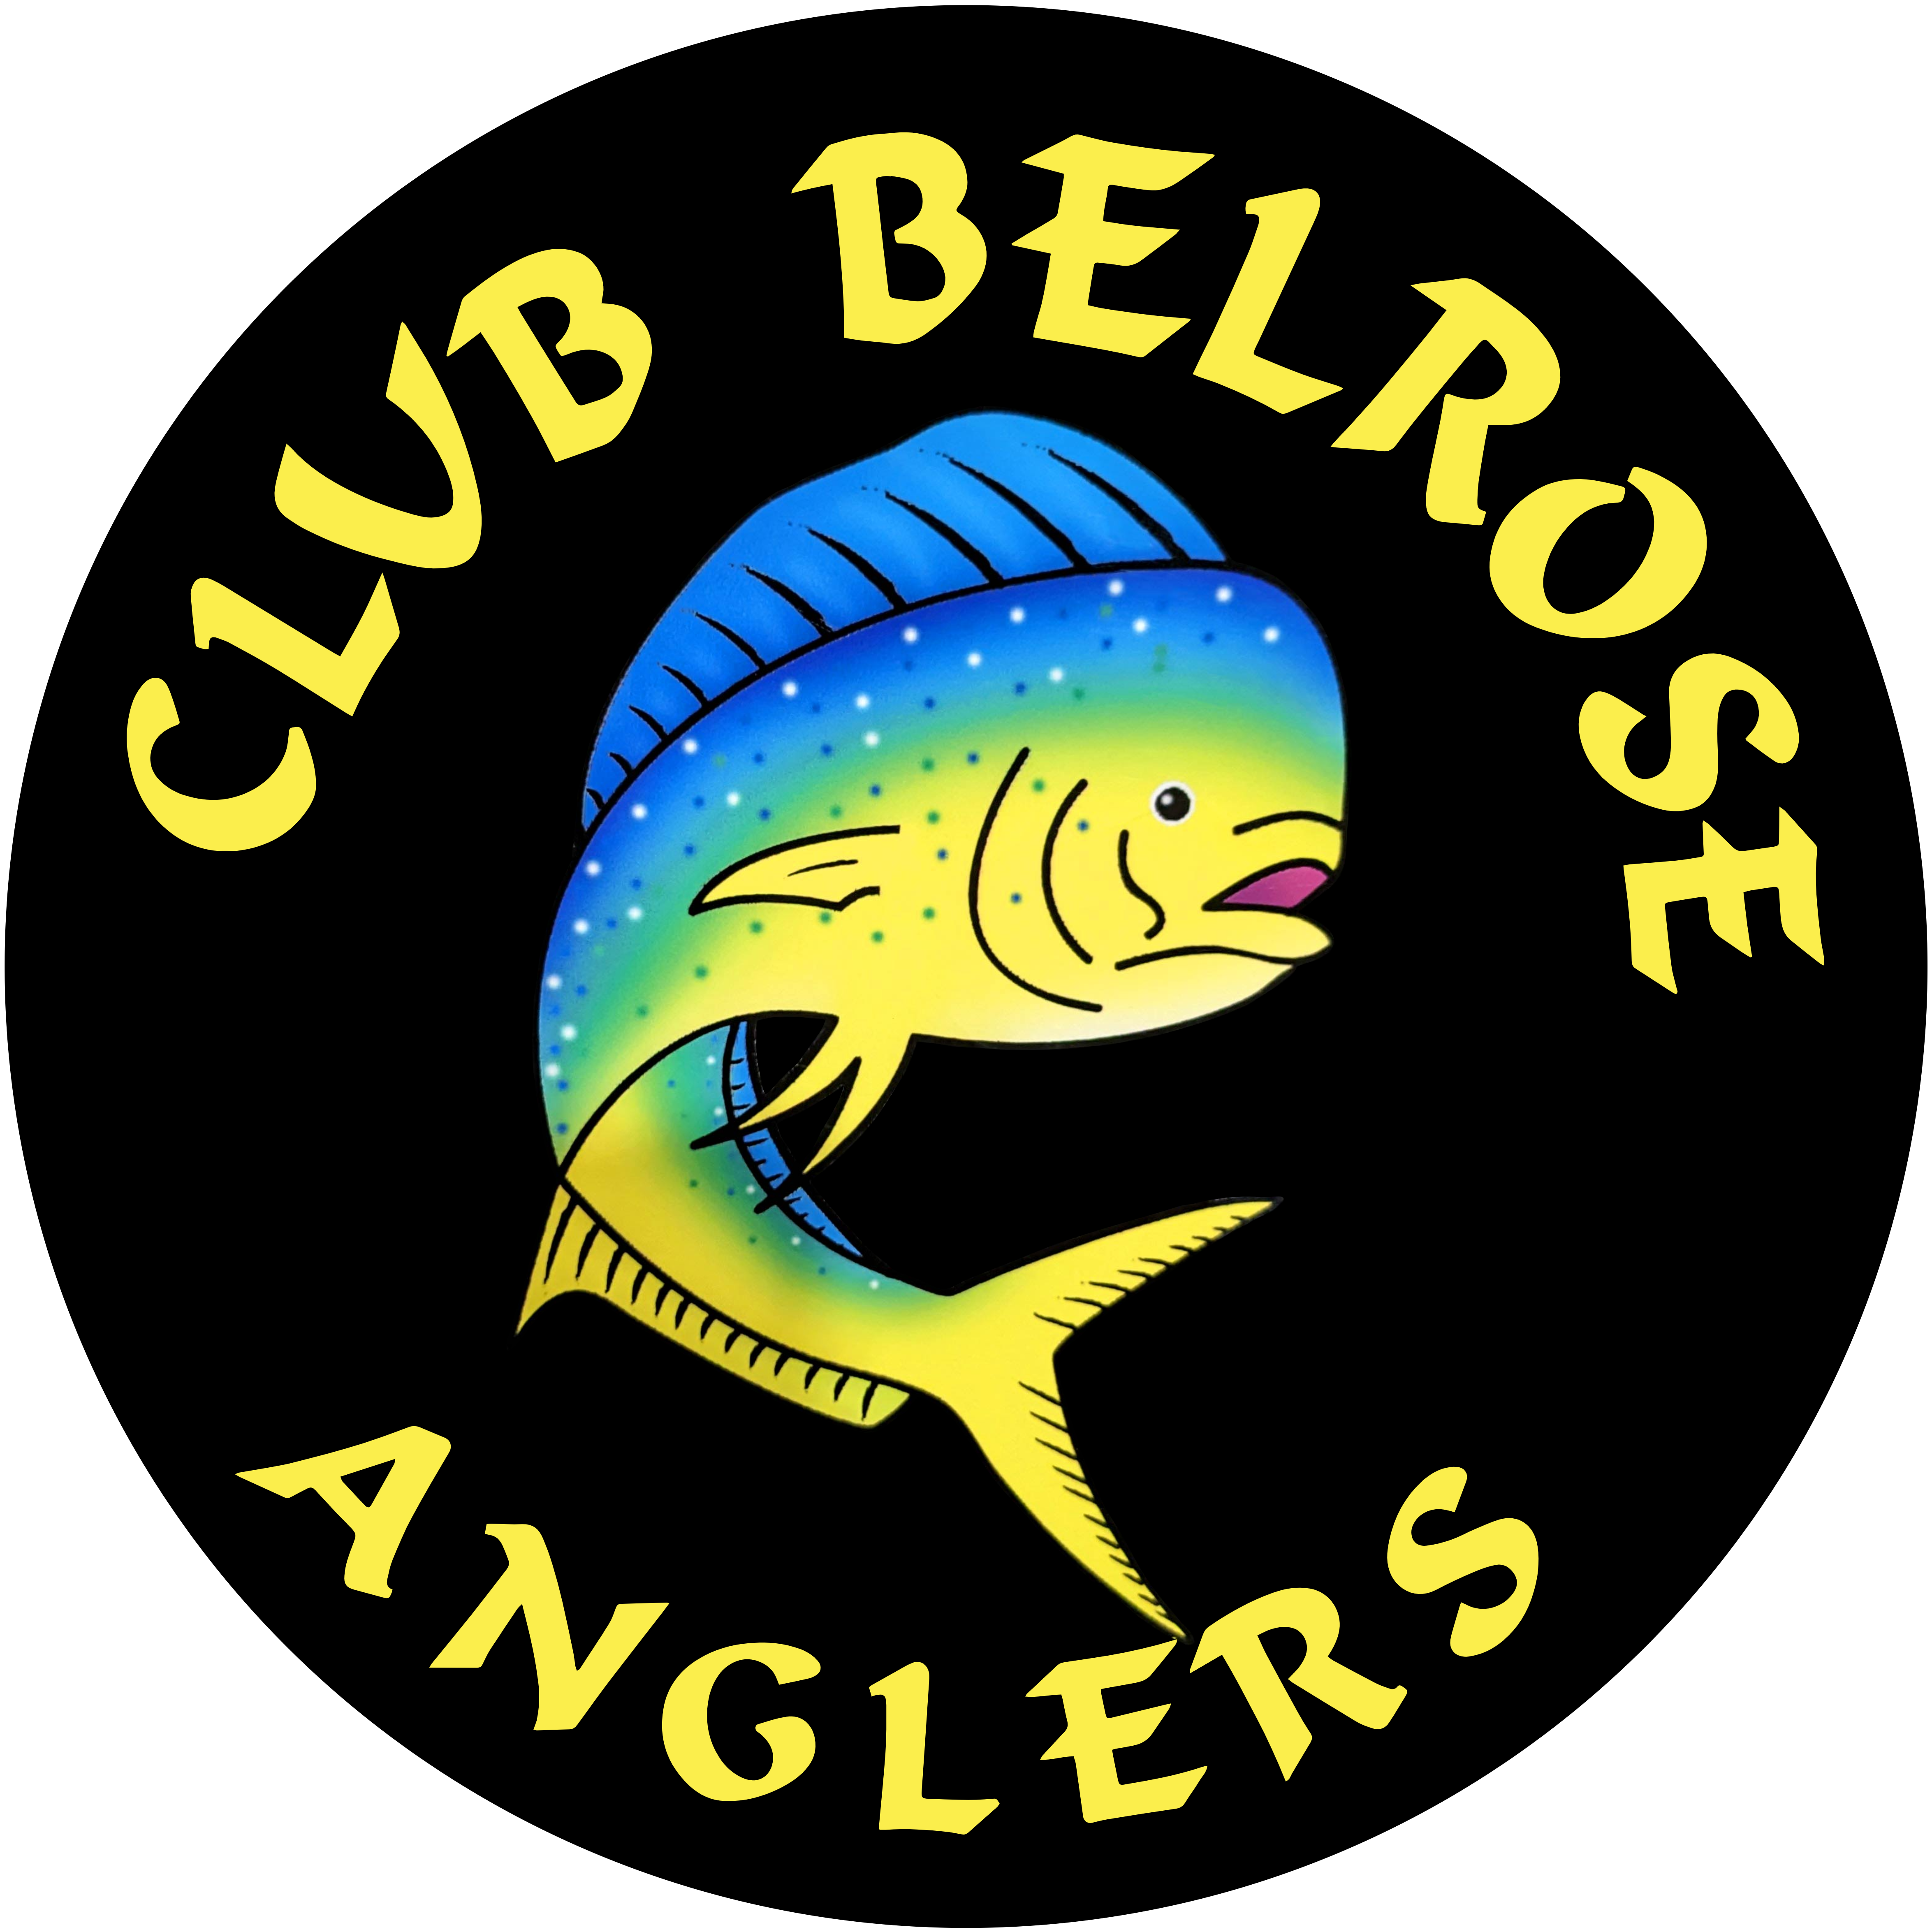 Club Belrose Anglers Logo